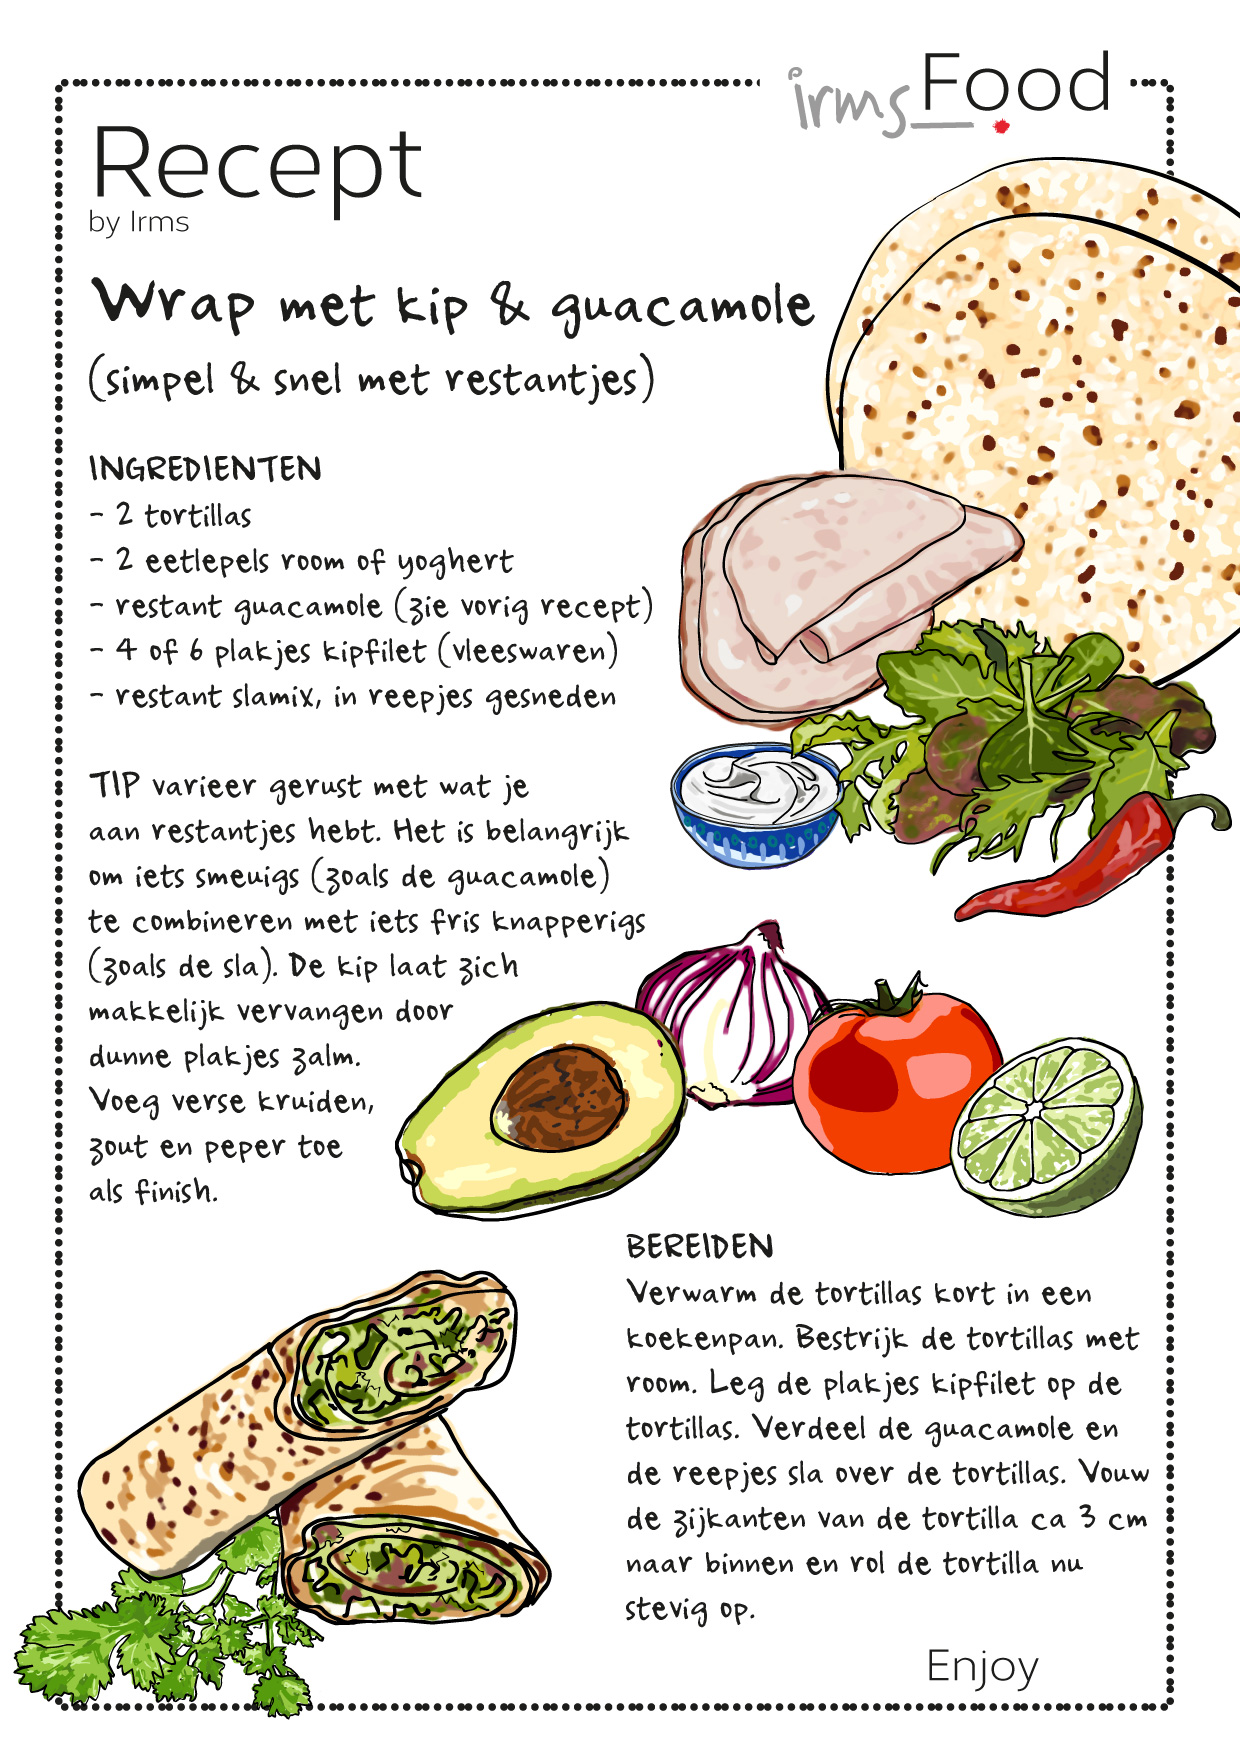 wrap-kip-guacamole-irmsblog-recept